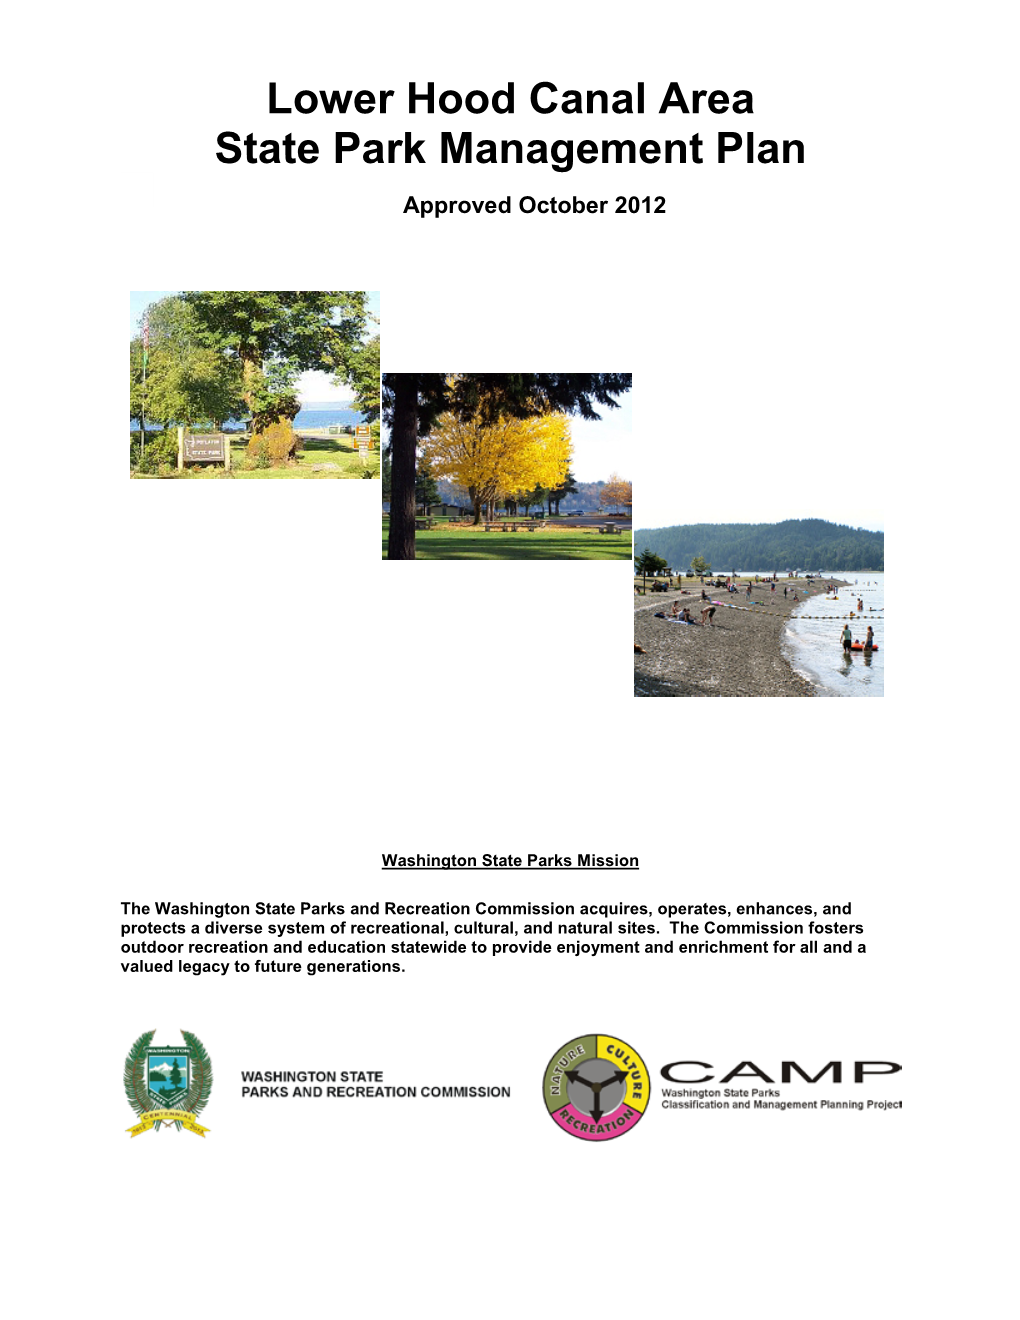 Dosewallips State Park Management Plan